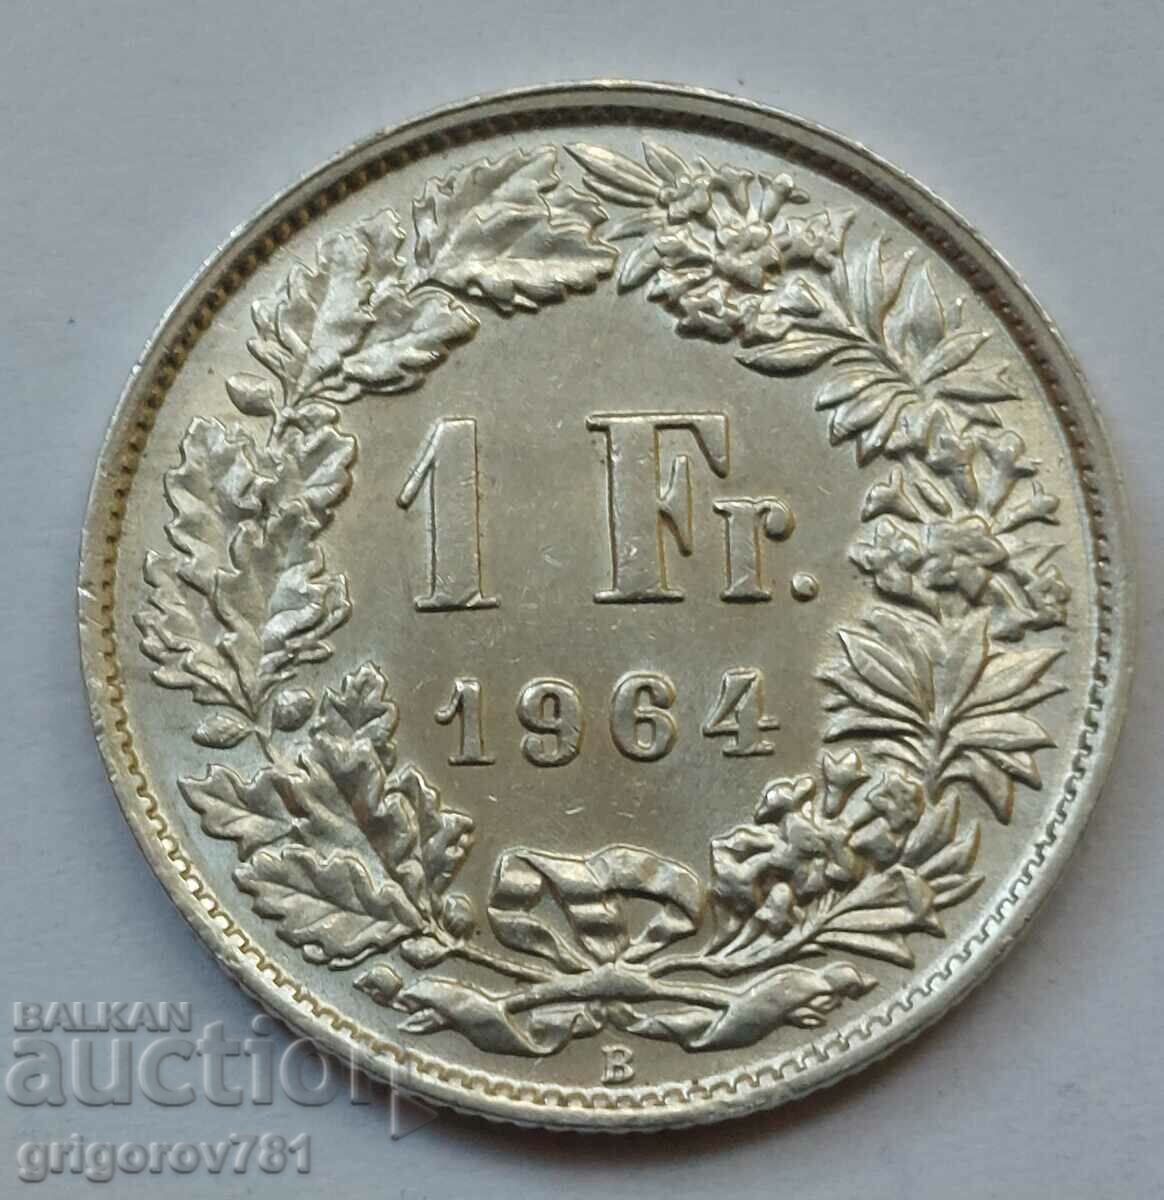 1 Franc Silver Switzerland 1964 B - Silver Coin #3